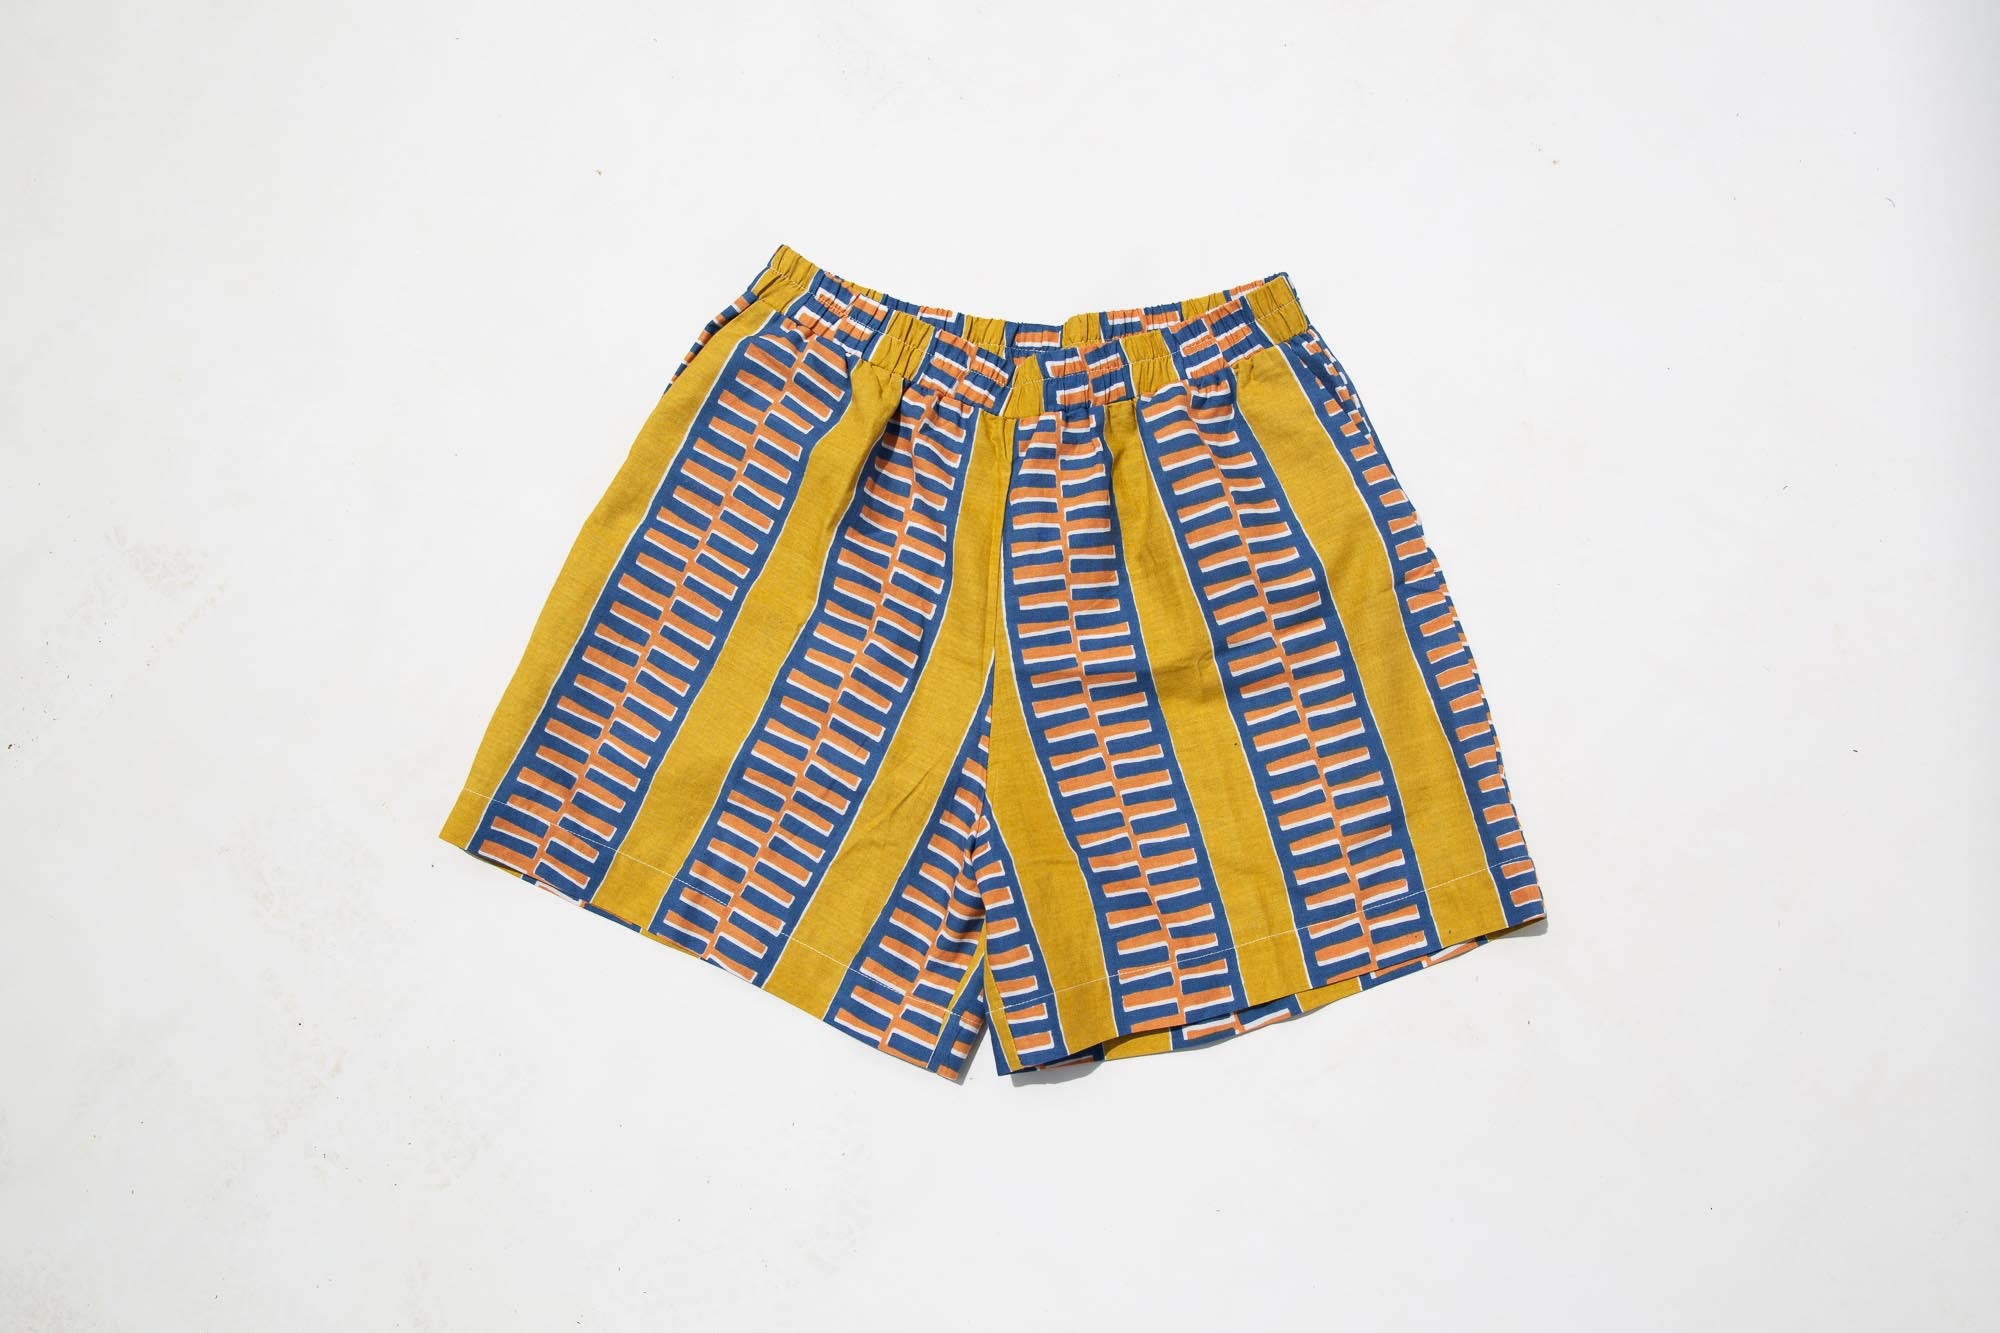 Display of olive-yellow, blue, orange and white geometric printed shorts